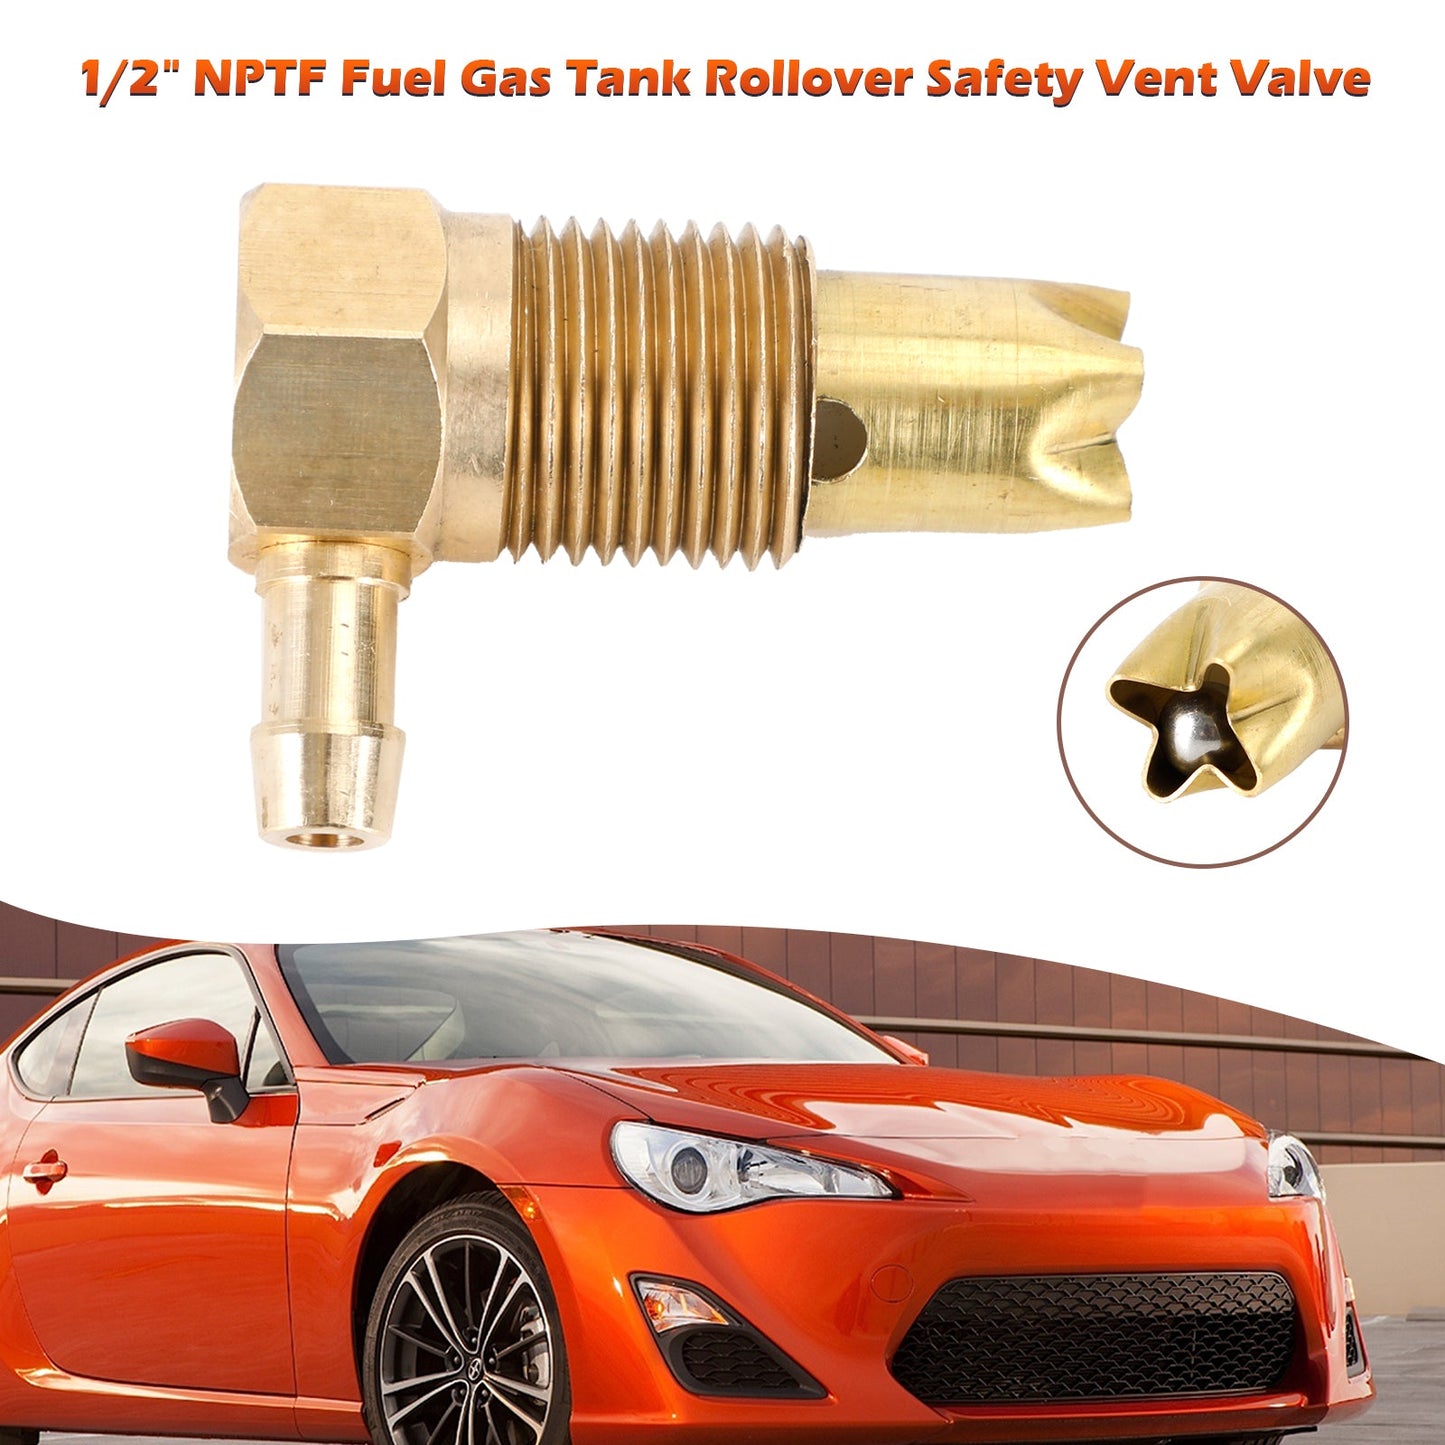 1/2" NPTF Fuel Gas Tank Rollover Safety Vent Valve Assembly 5/16 Hose